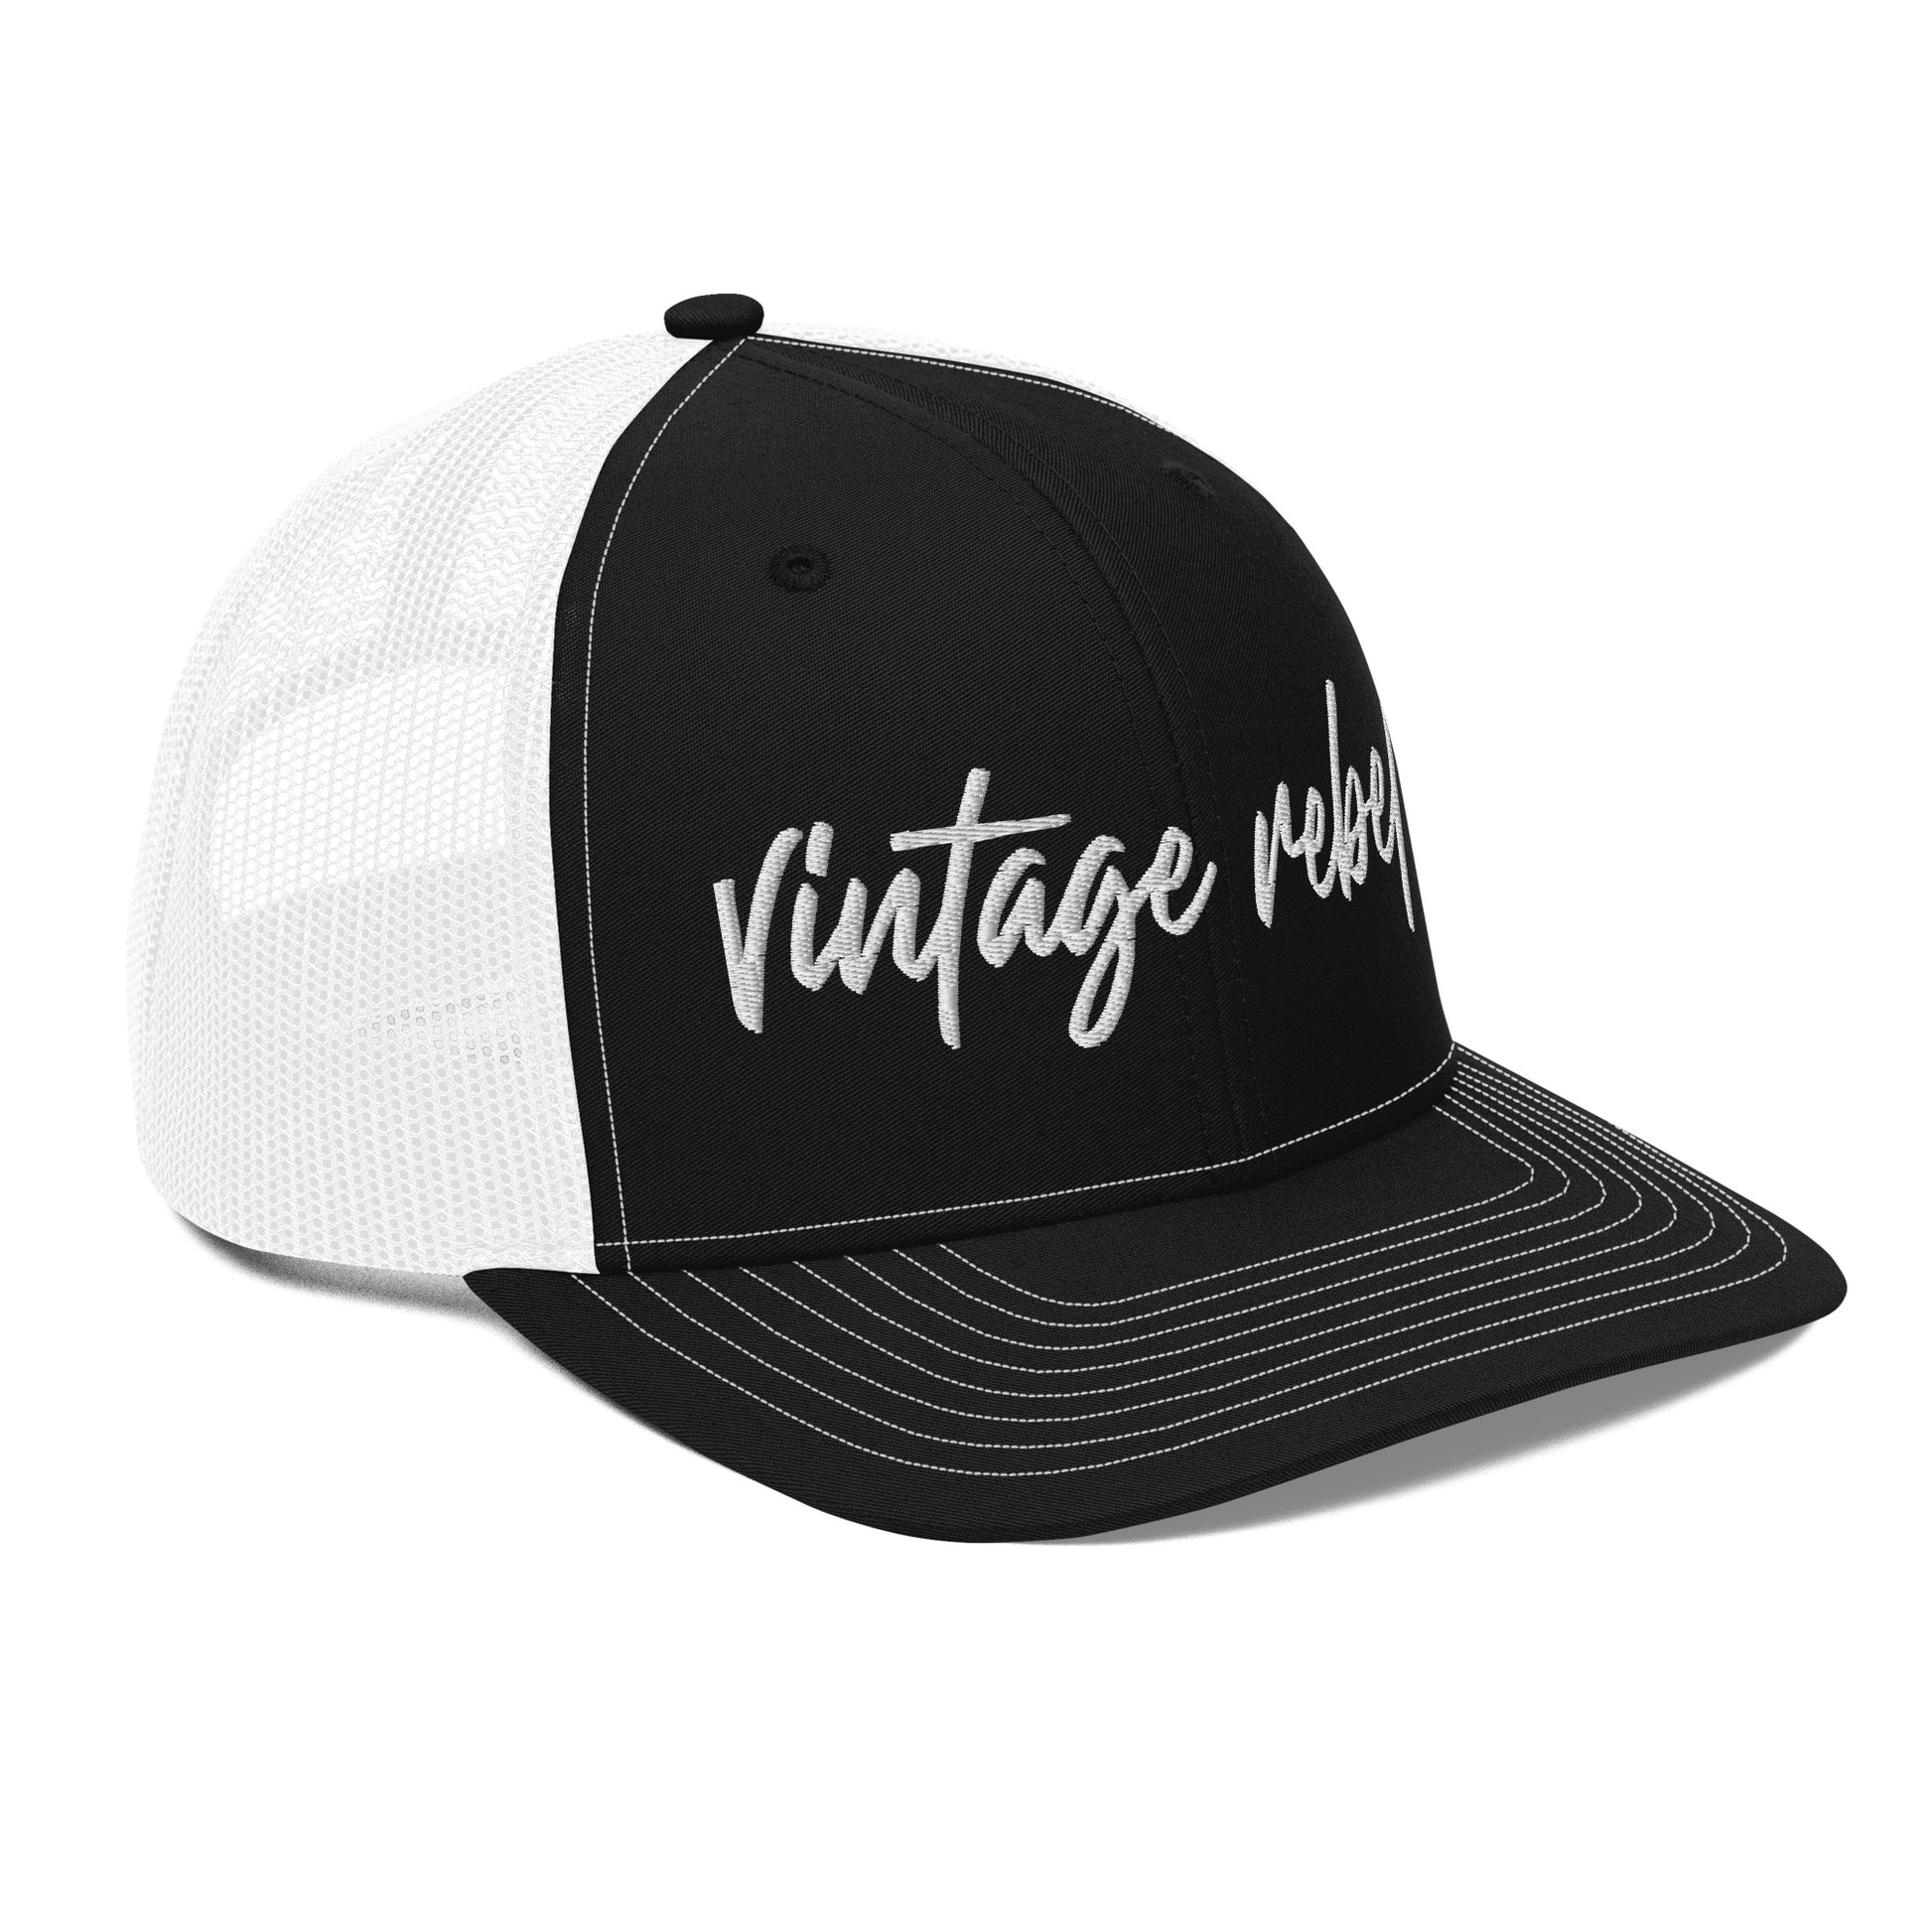 Vintage Rebel trucker cap black